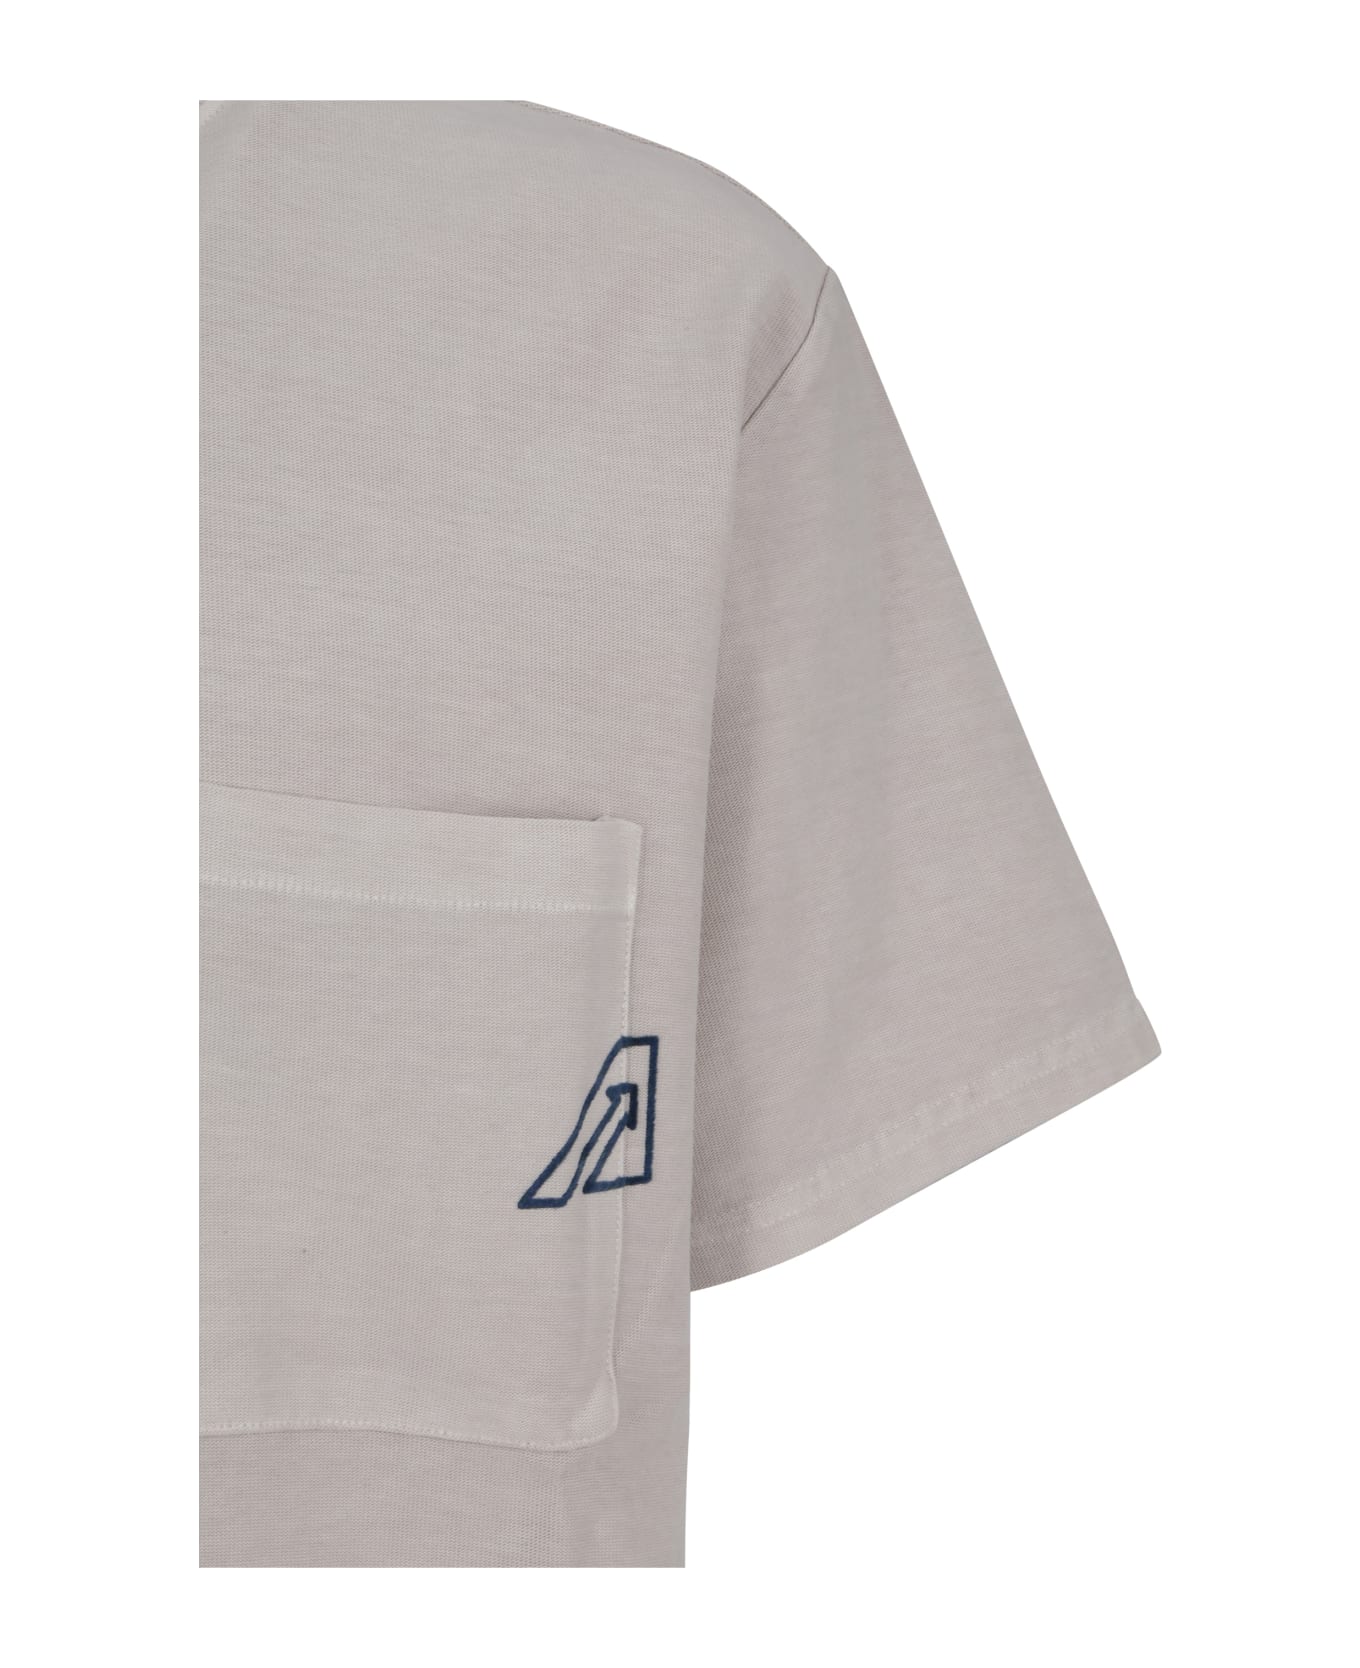 Autry Logo Pocket T-shirt - Storm シャツ